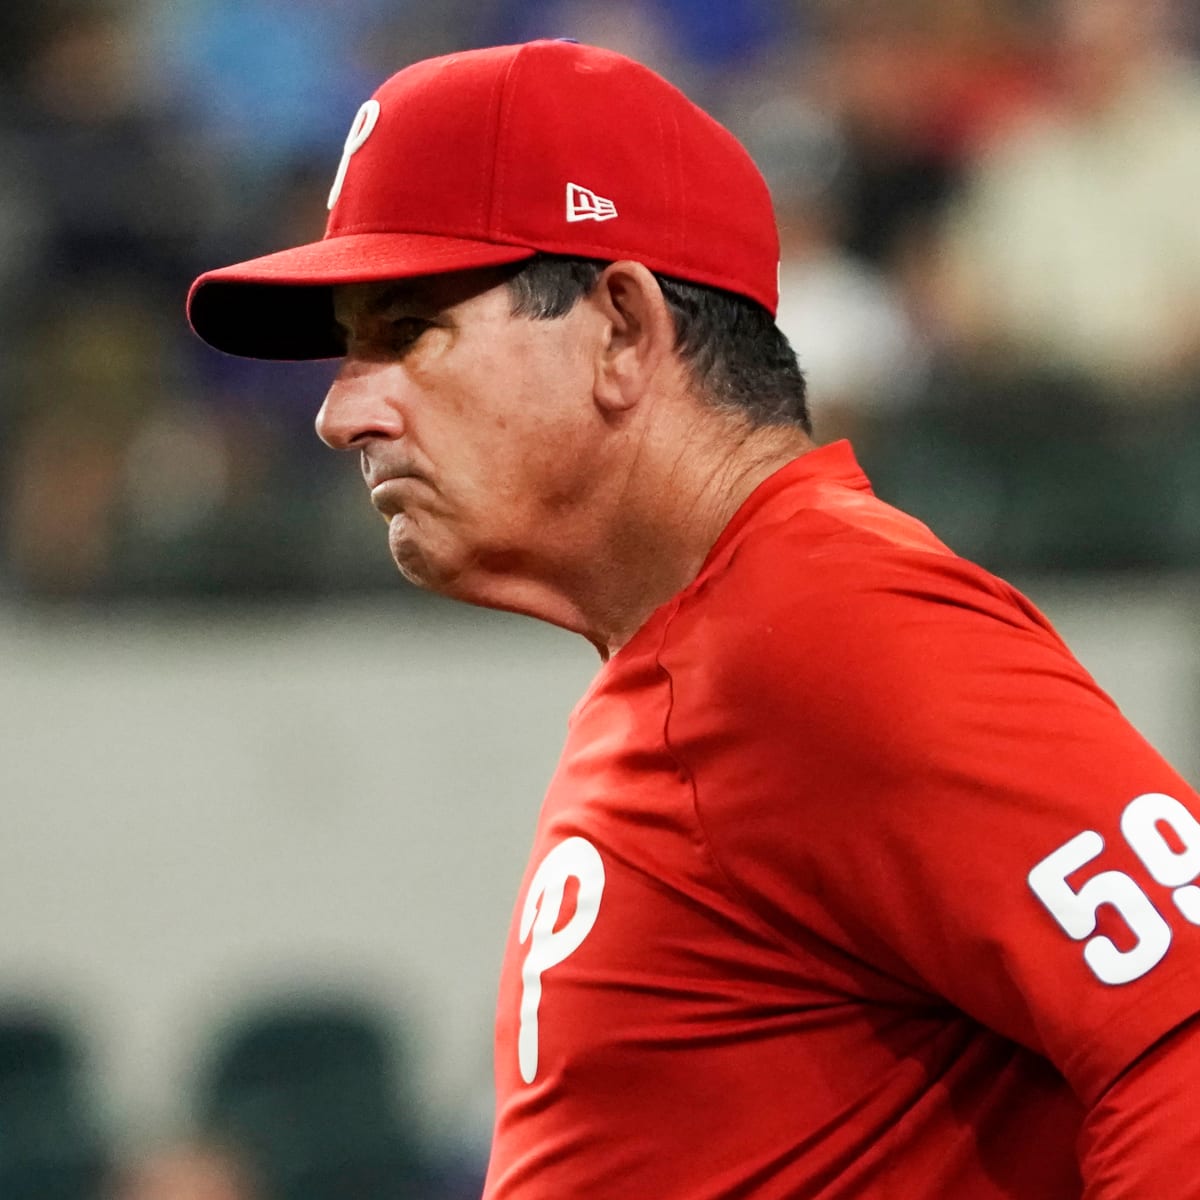 Phillies end 9-game win streak, skipper Thomson's 1st loss